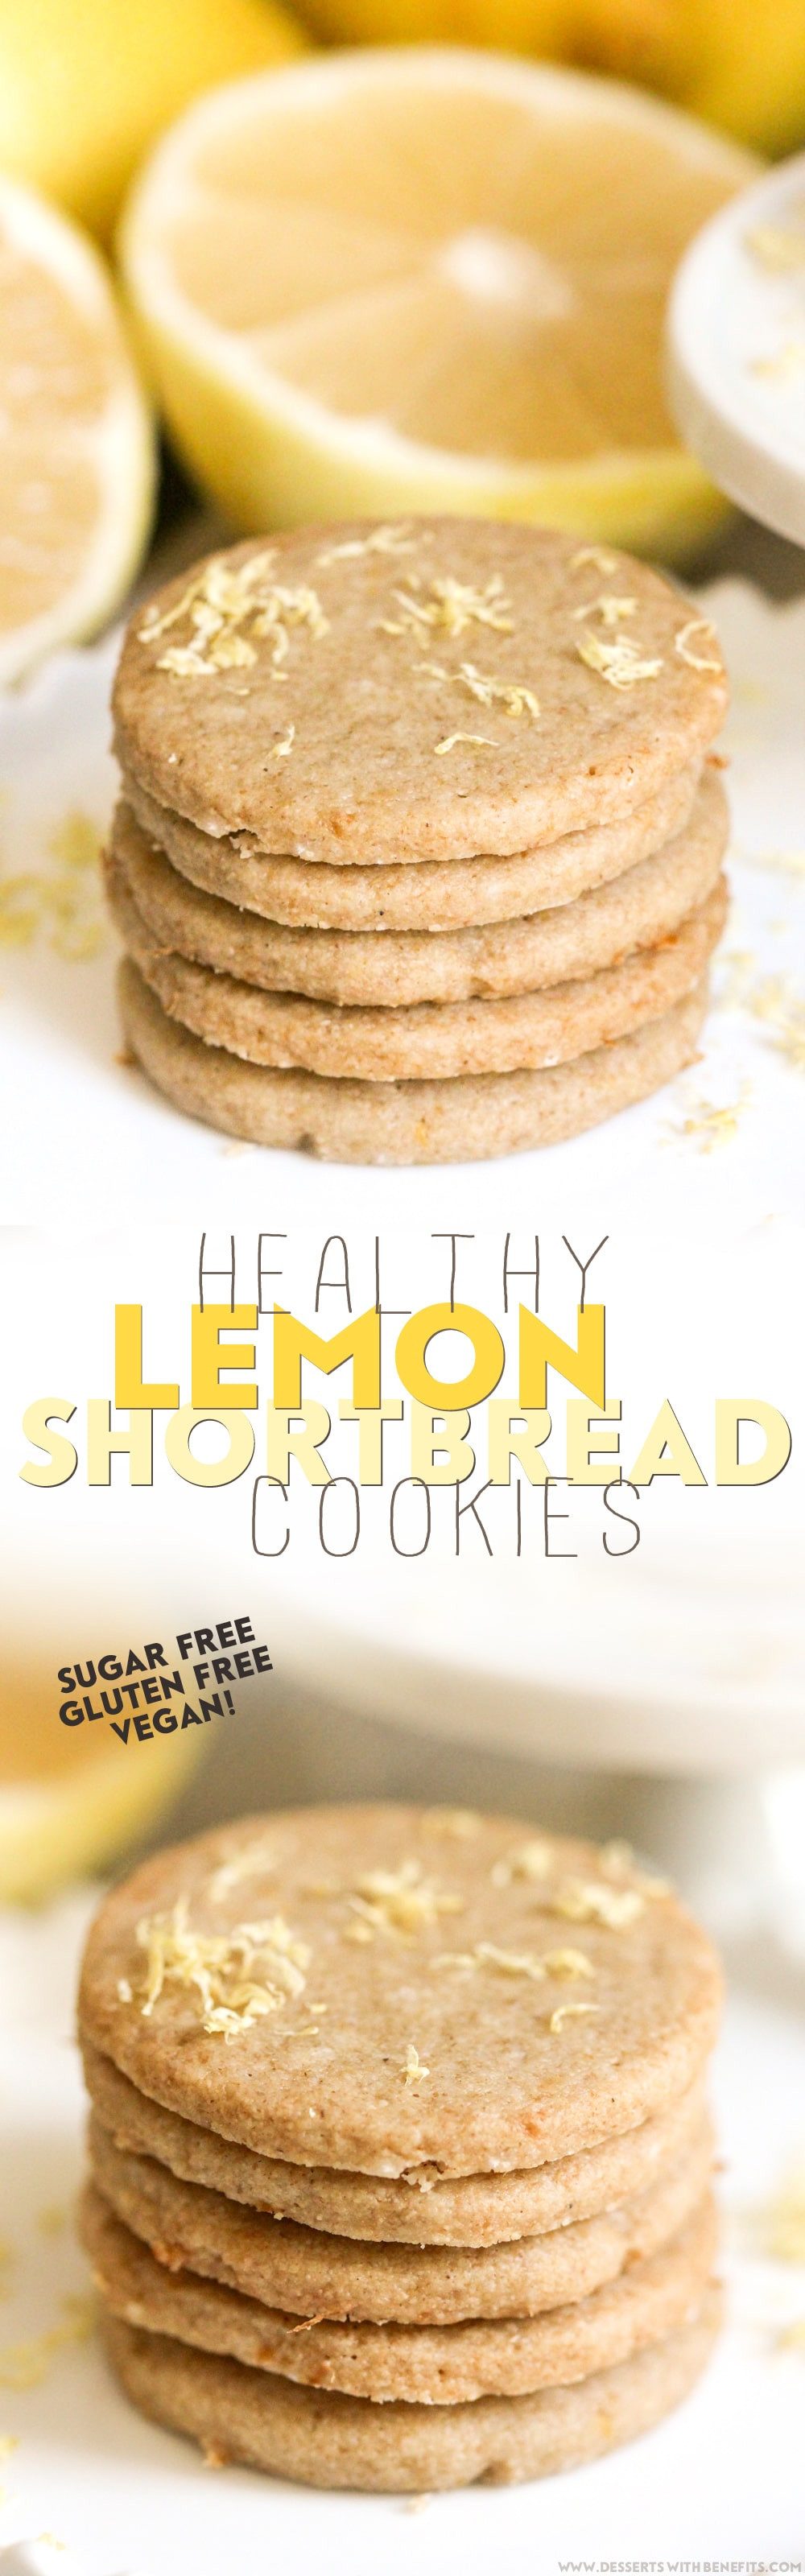 Healthy Lemon Dessert Recipes
 Healthy Lemon Shortbread Cookies recipe sugar free